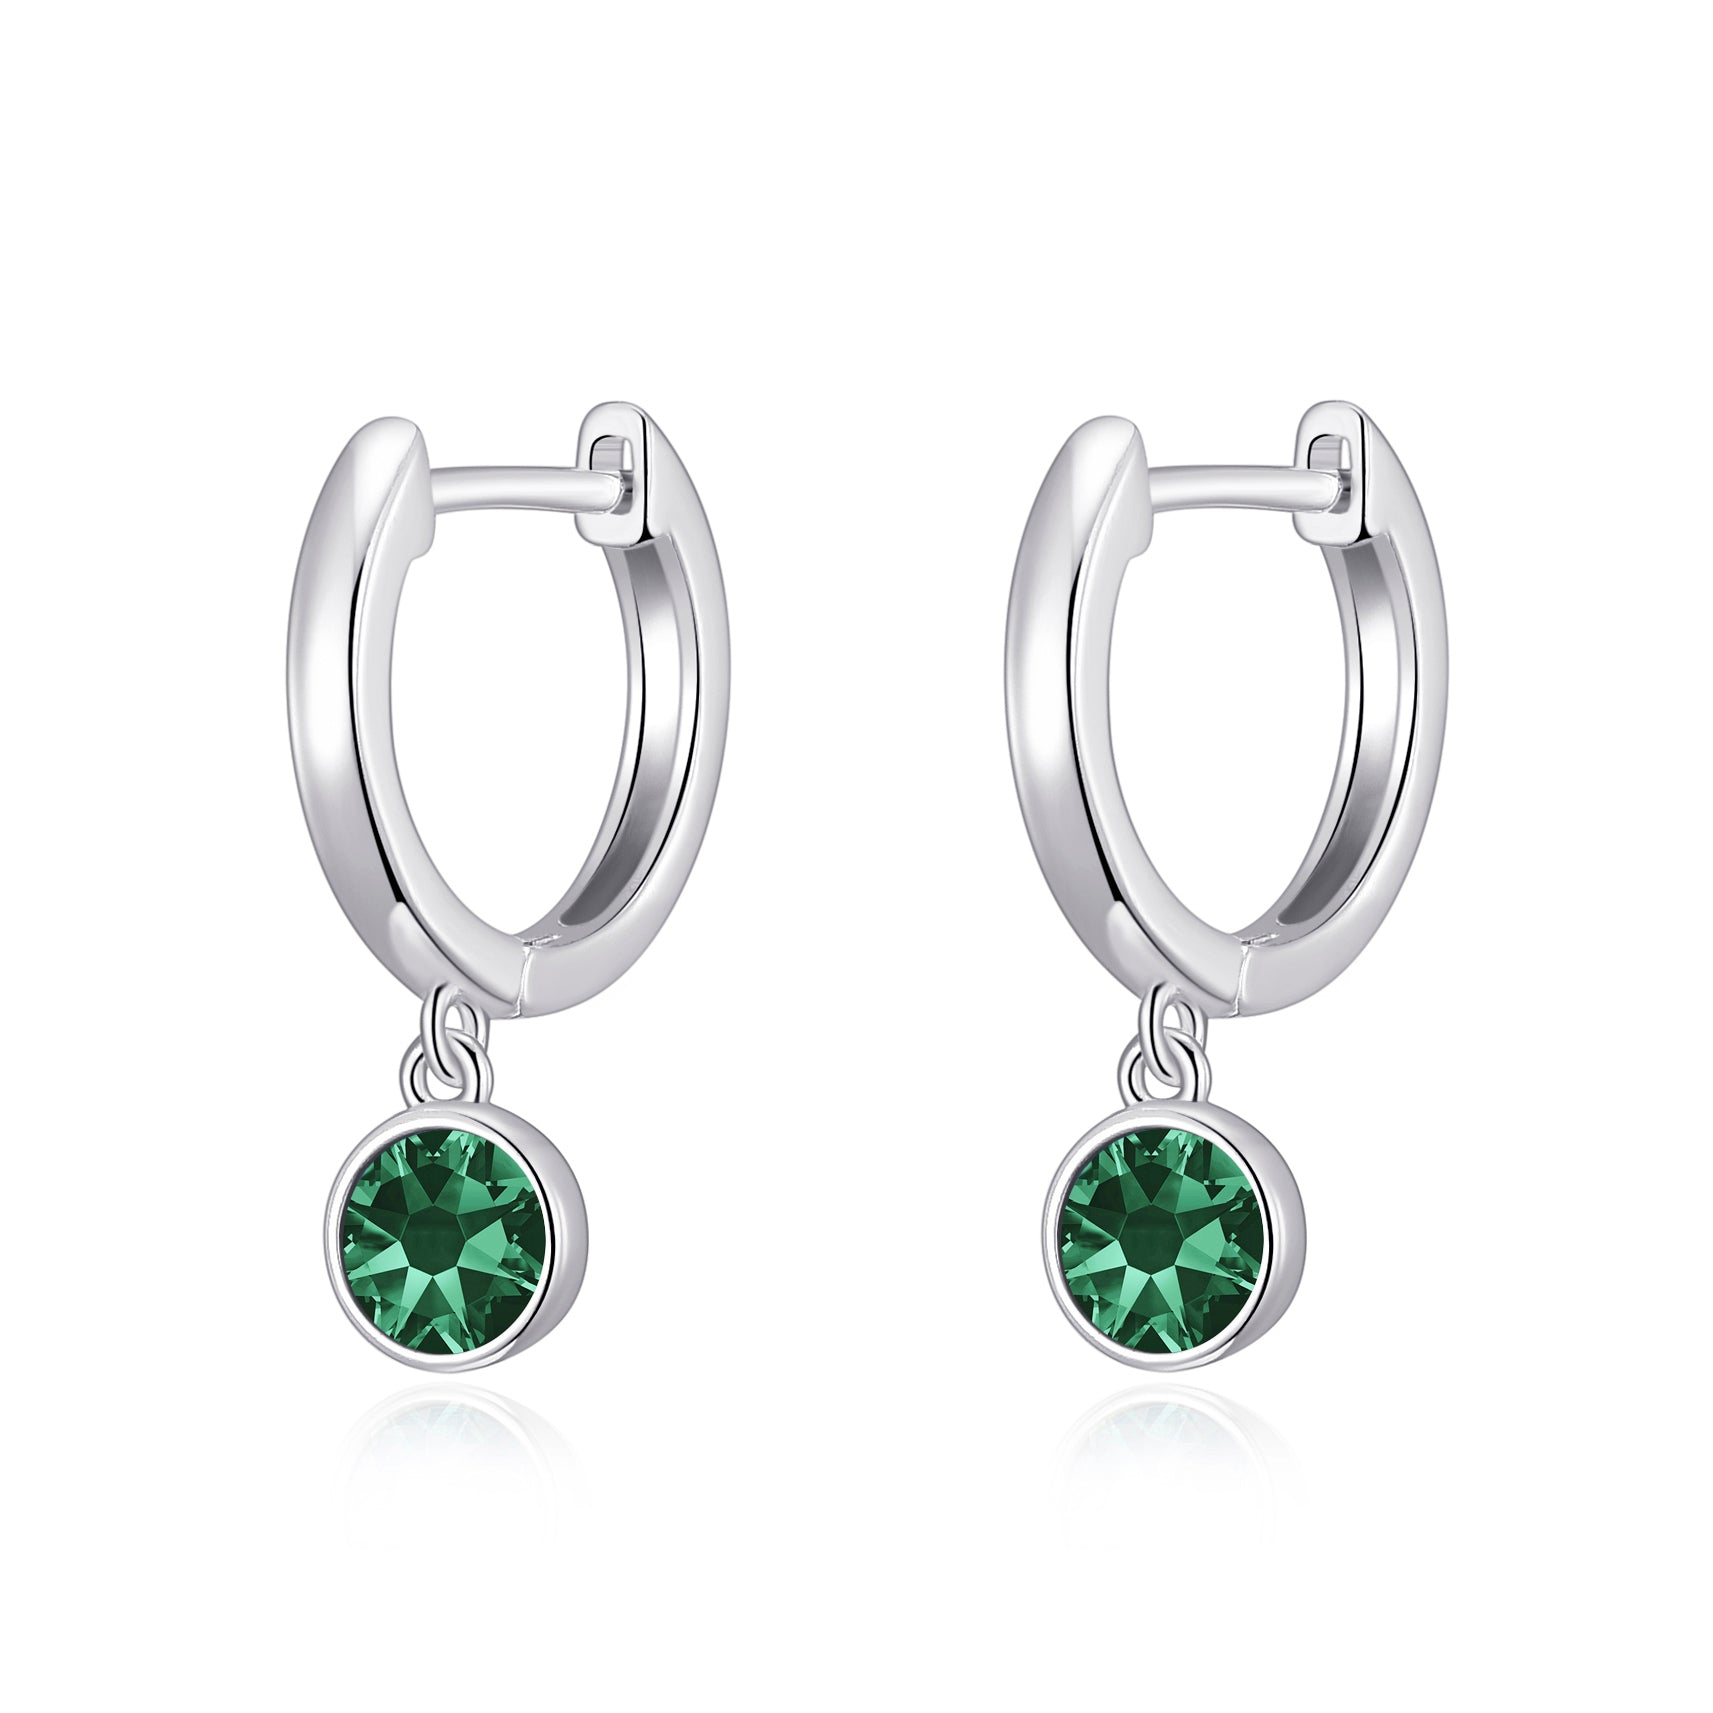 Green Crystal Hoop Earrings Created with Zircondia® Crystals by Philip Jones Jewellery